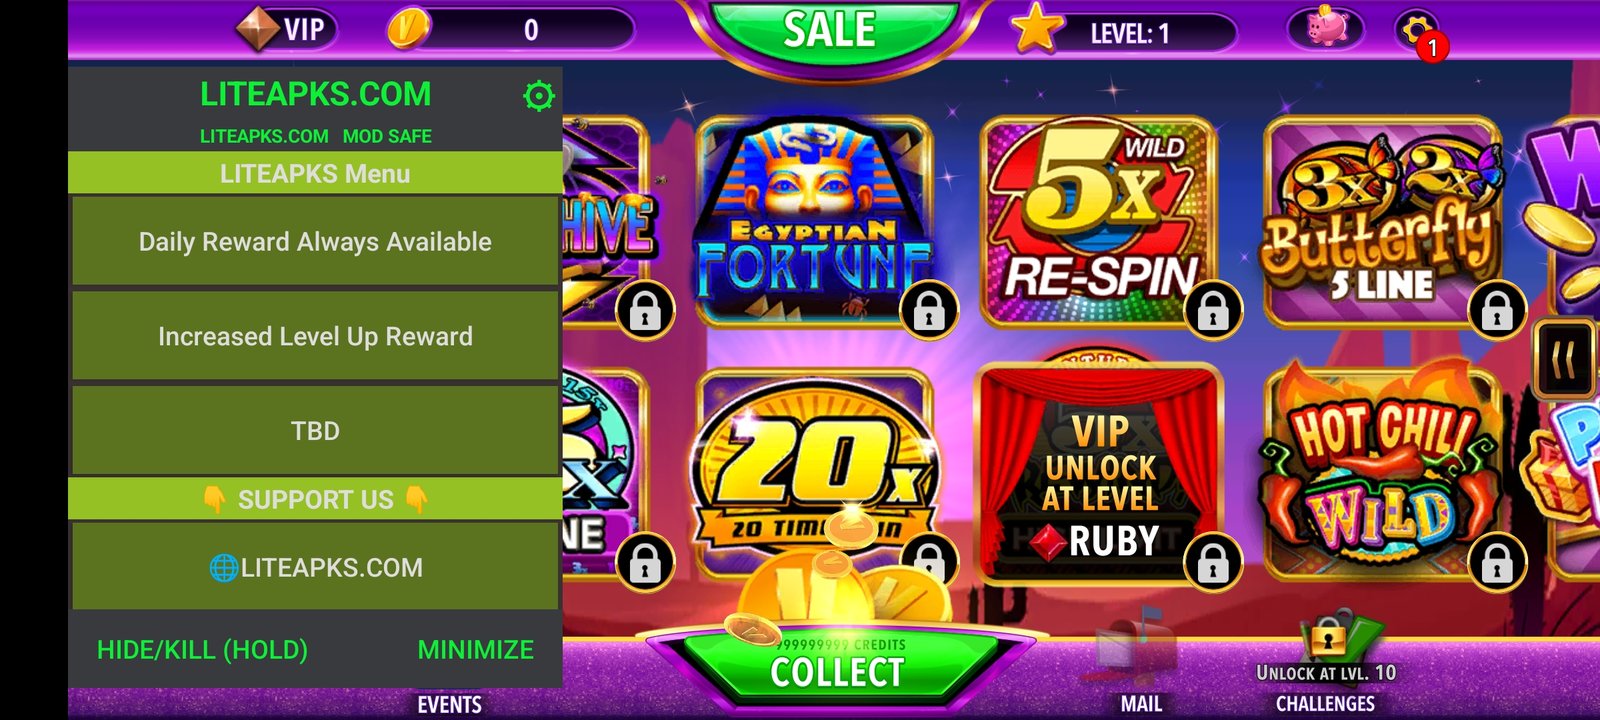 Best Free Slots  Viva Slots Vegas™ Free Slot Casino Games Online Gameplay  Walkthrough Part 9 